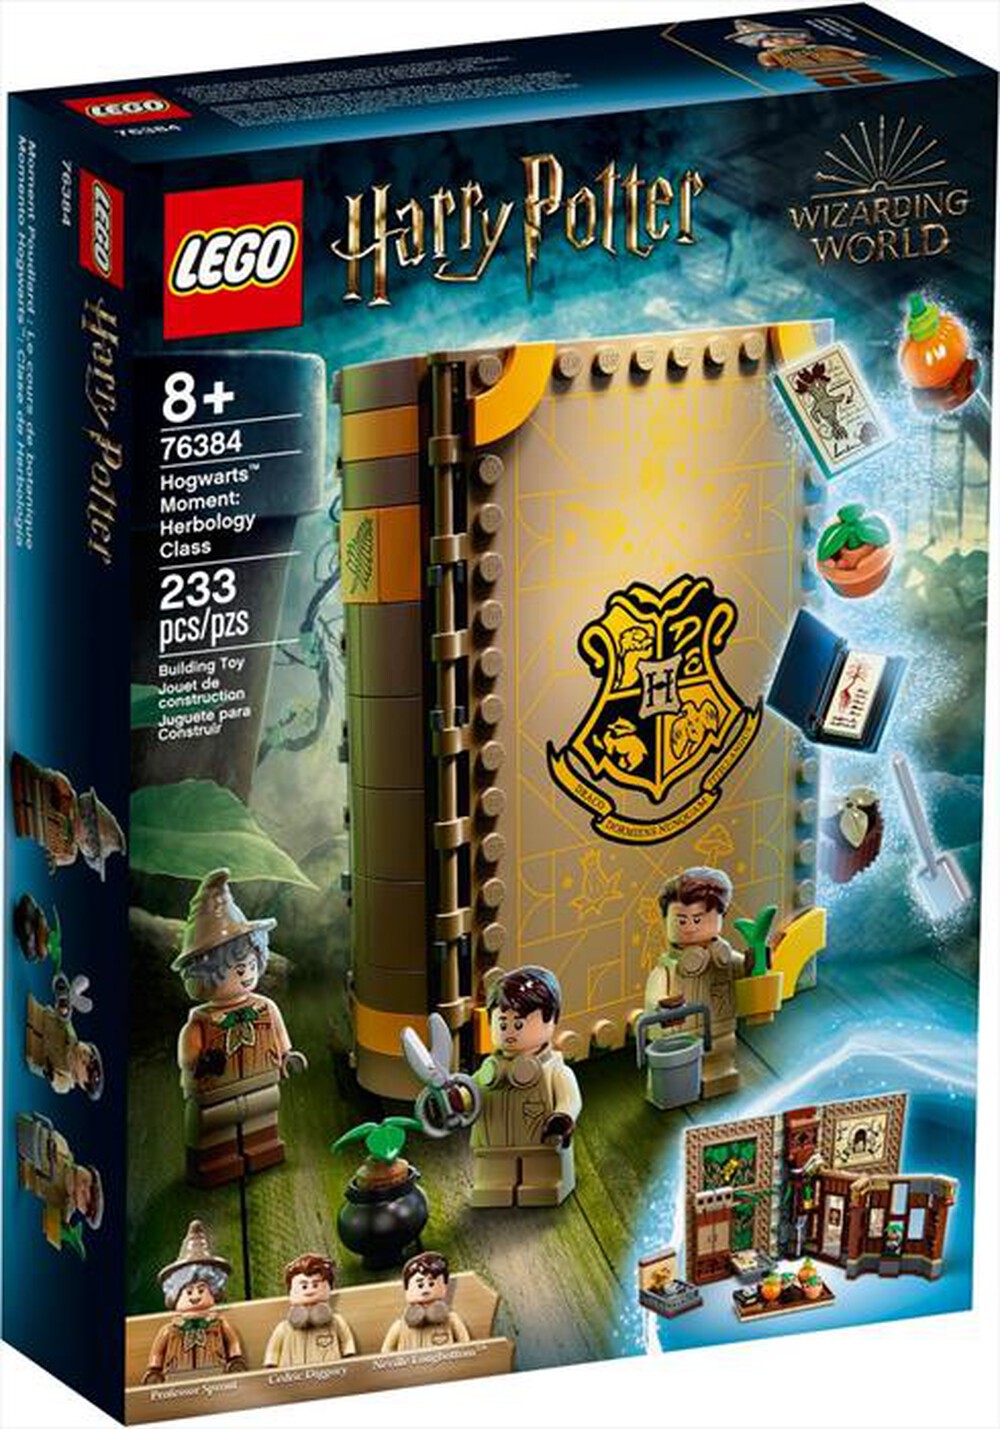 "LEGO - HARRY POTTER - 76384 - "